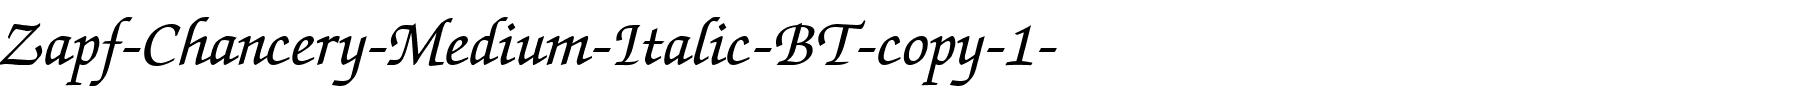 Zapf-Chancery-Medium-Italic-BT-copy-1-